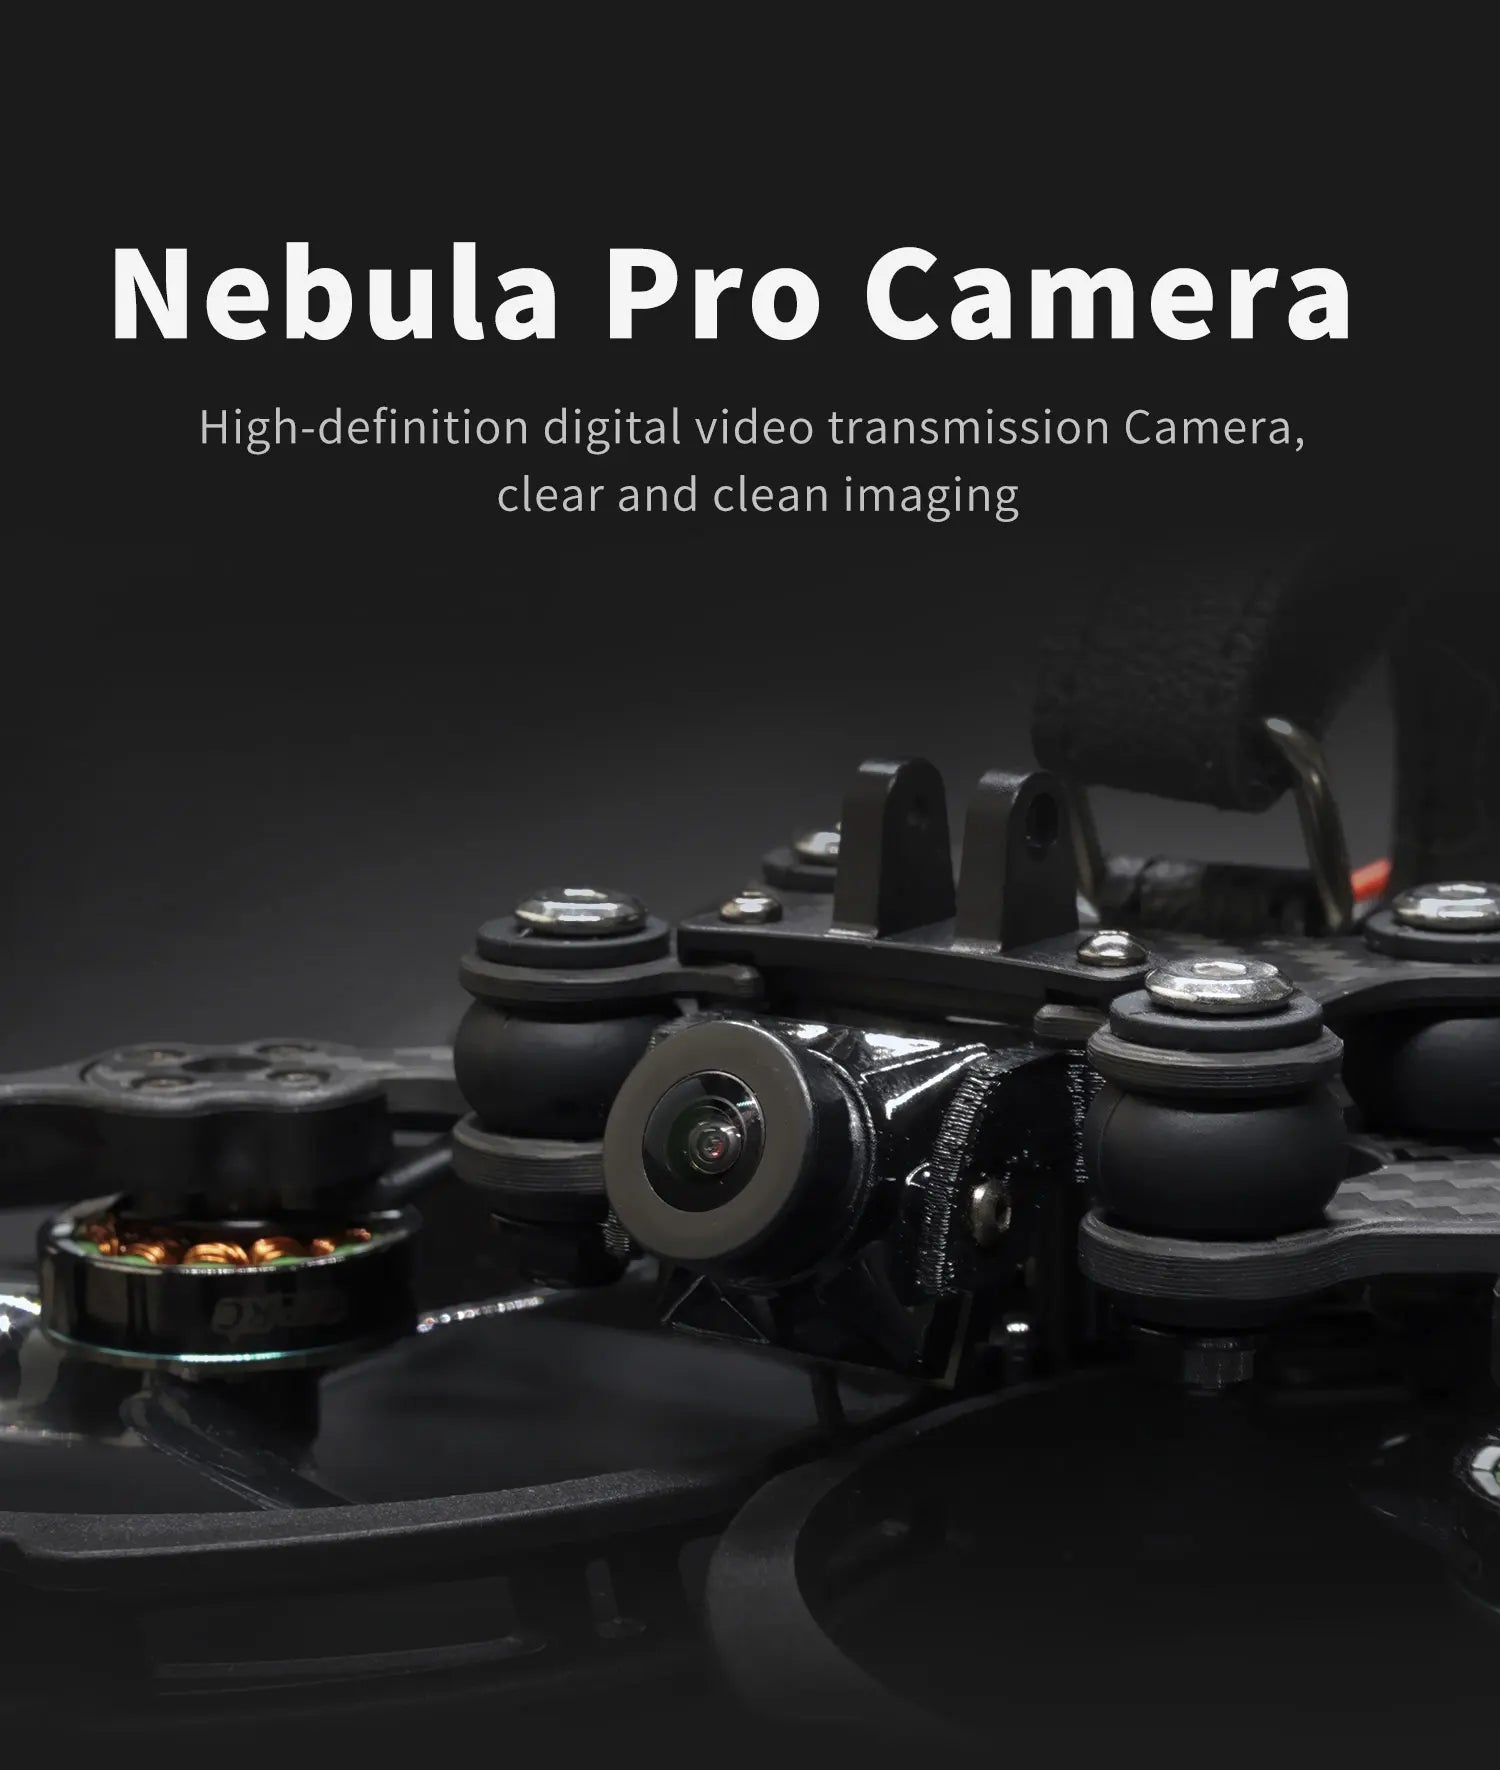 GEPRC CineLog35 FPV Drone, Nebula Pro Camera High-definition digital video transmission Camera, clear and clean